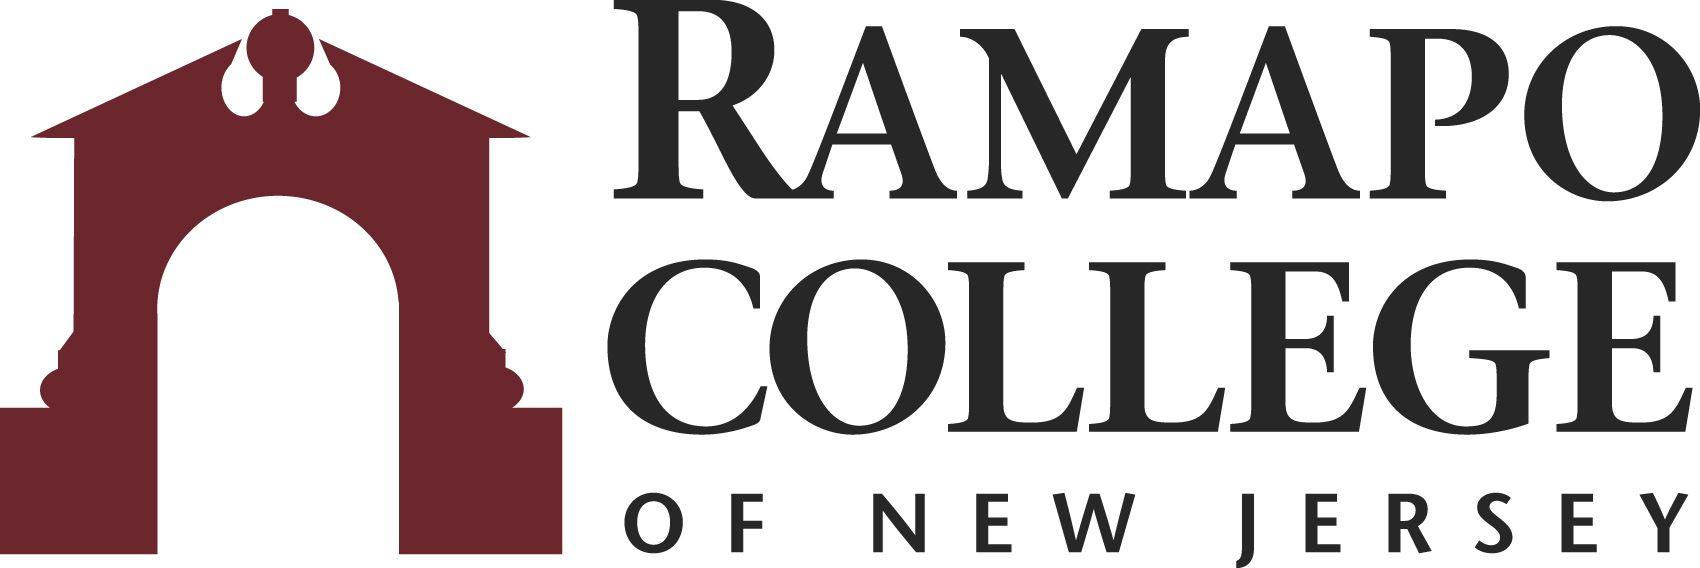 New Jersey Logo - Logo / Template Downloads Standard.. Ramapo College of New